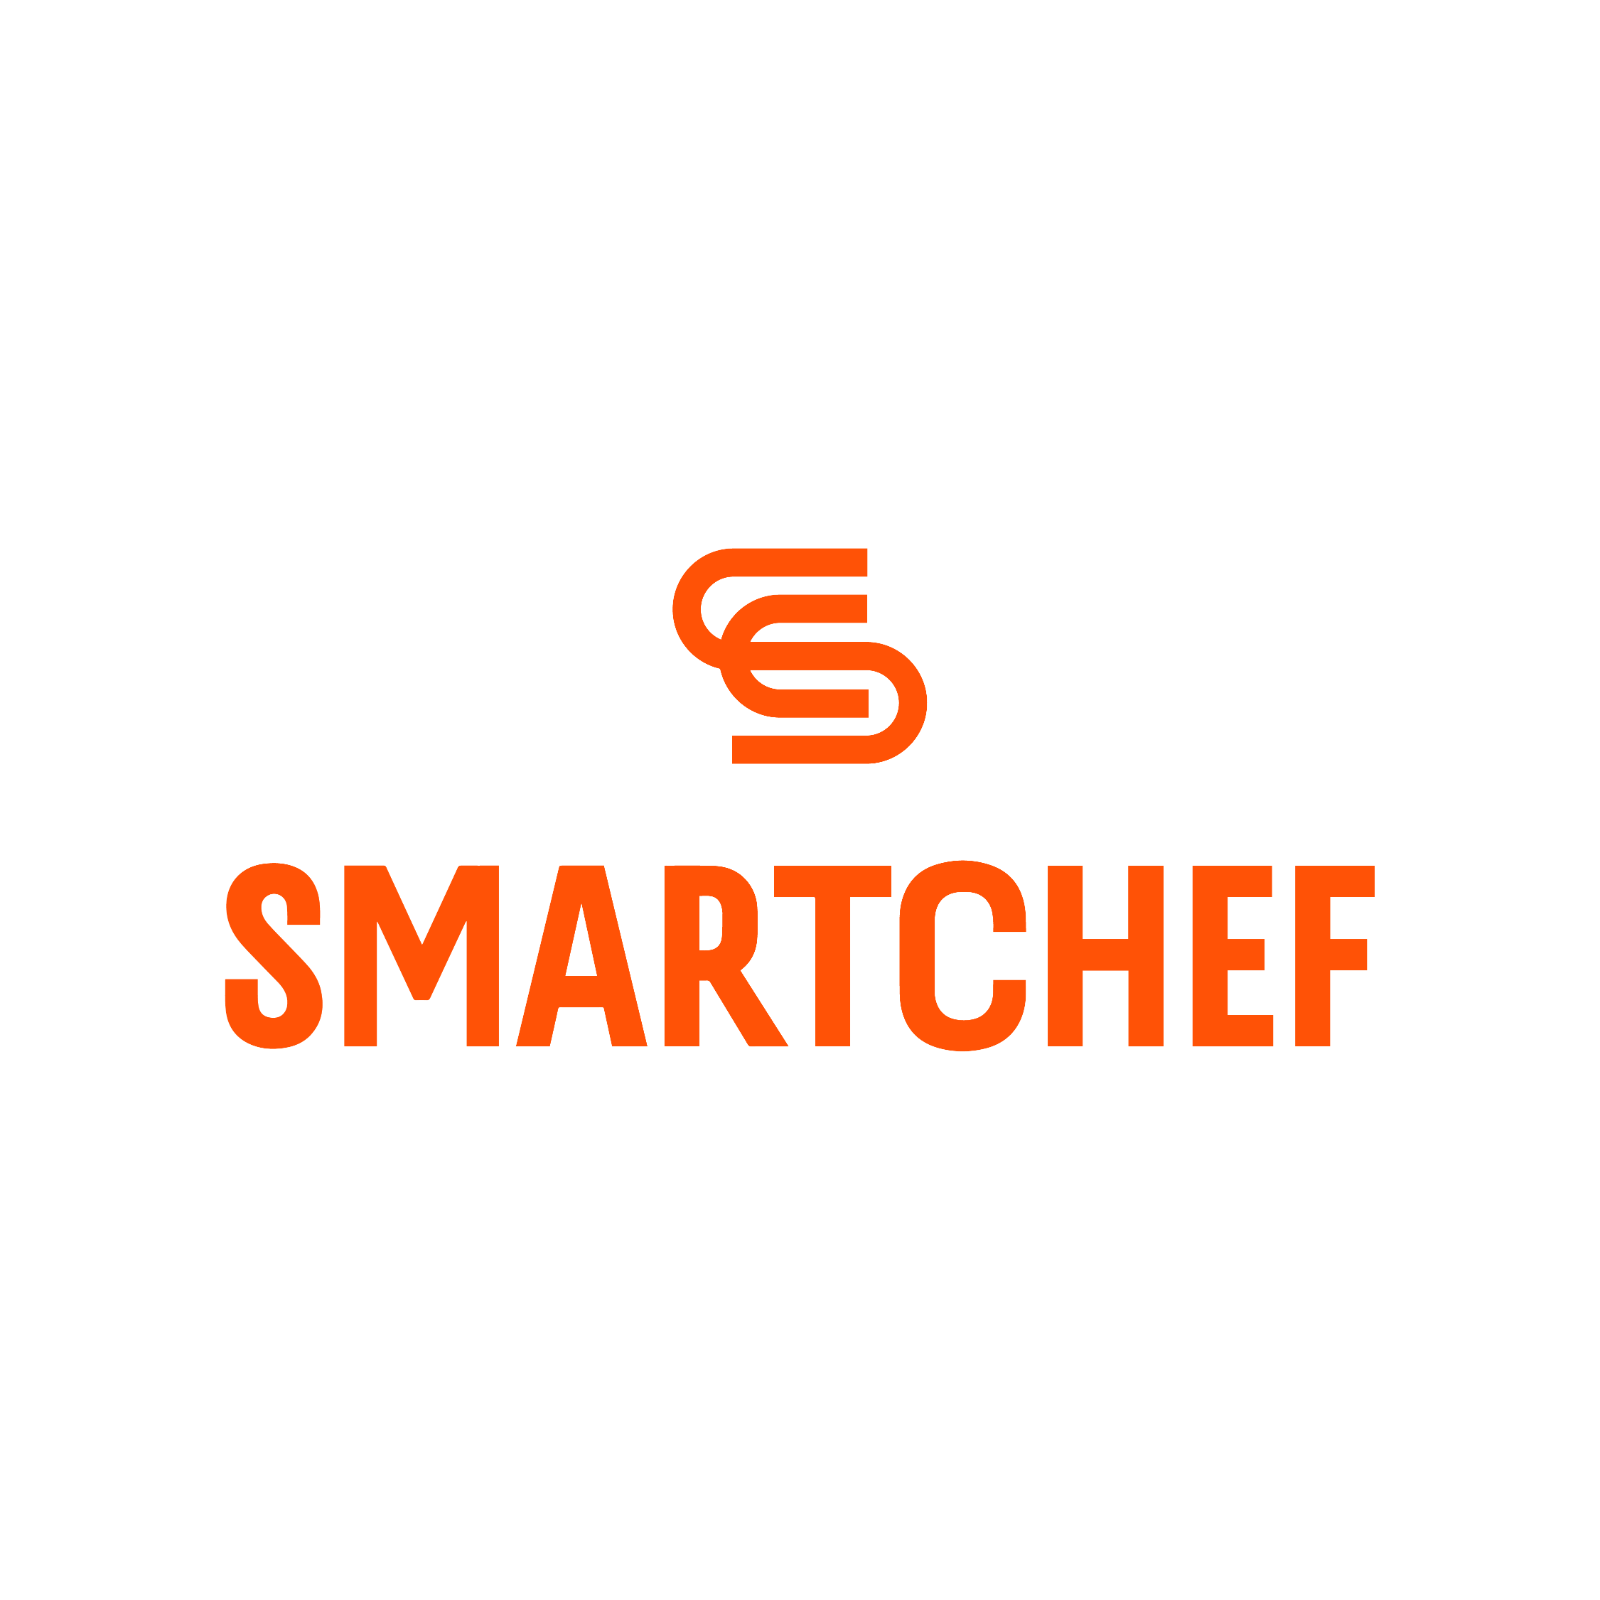 Smartchef logo 09